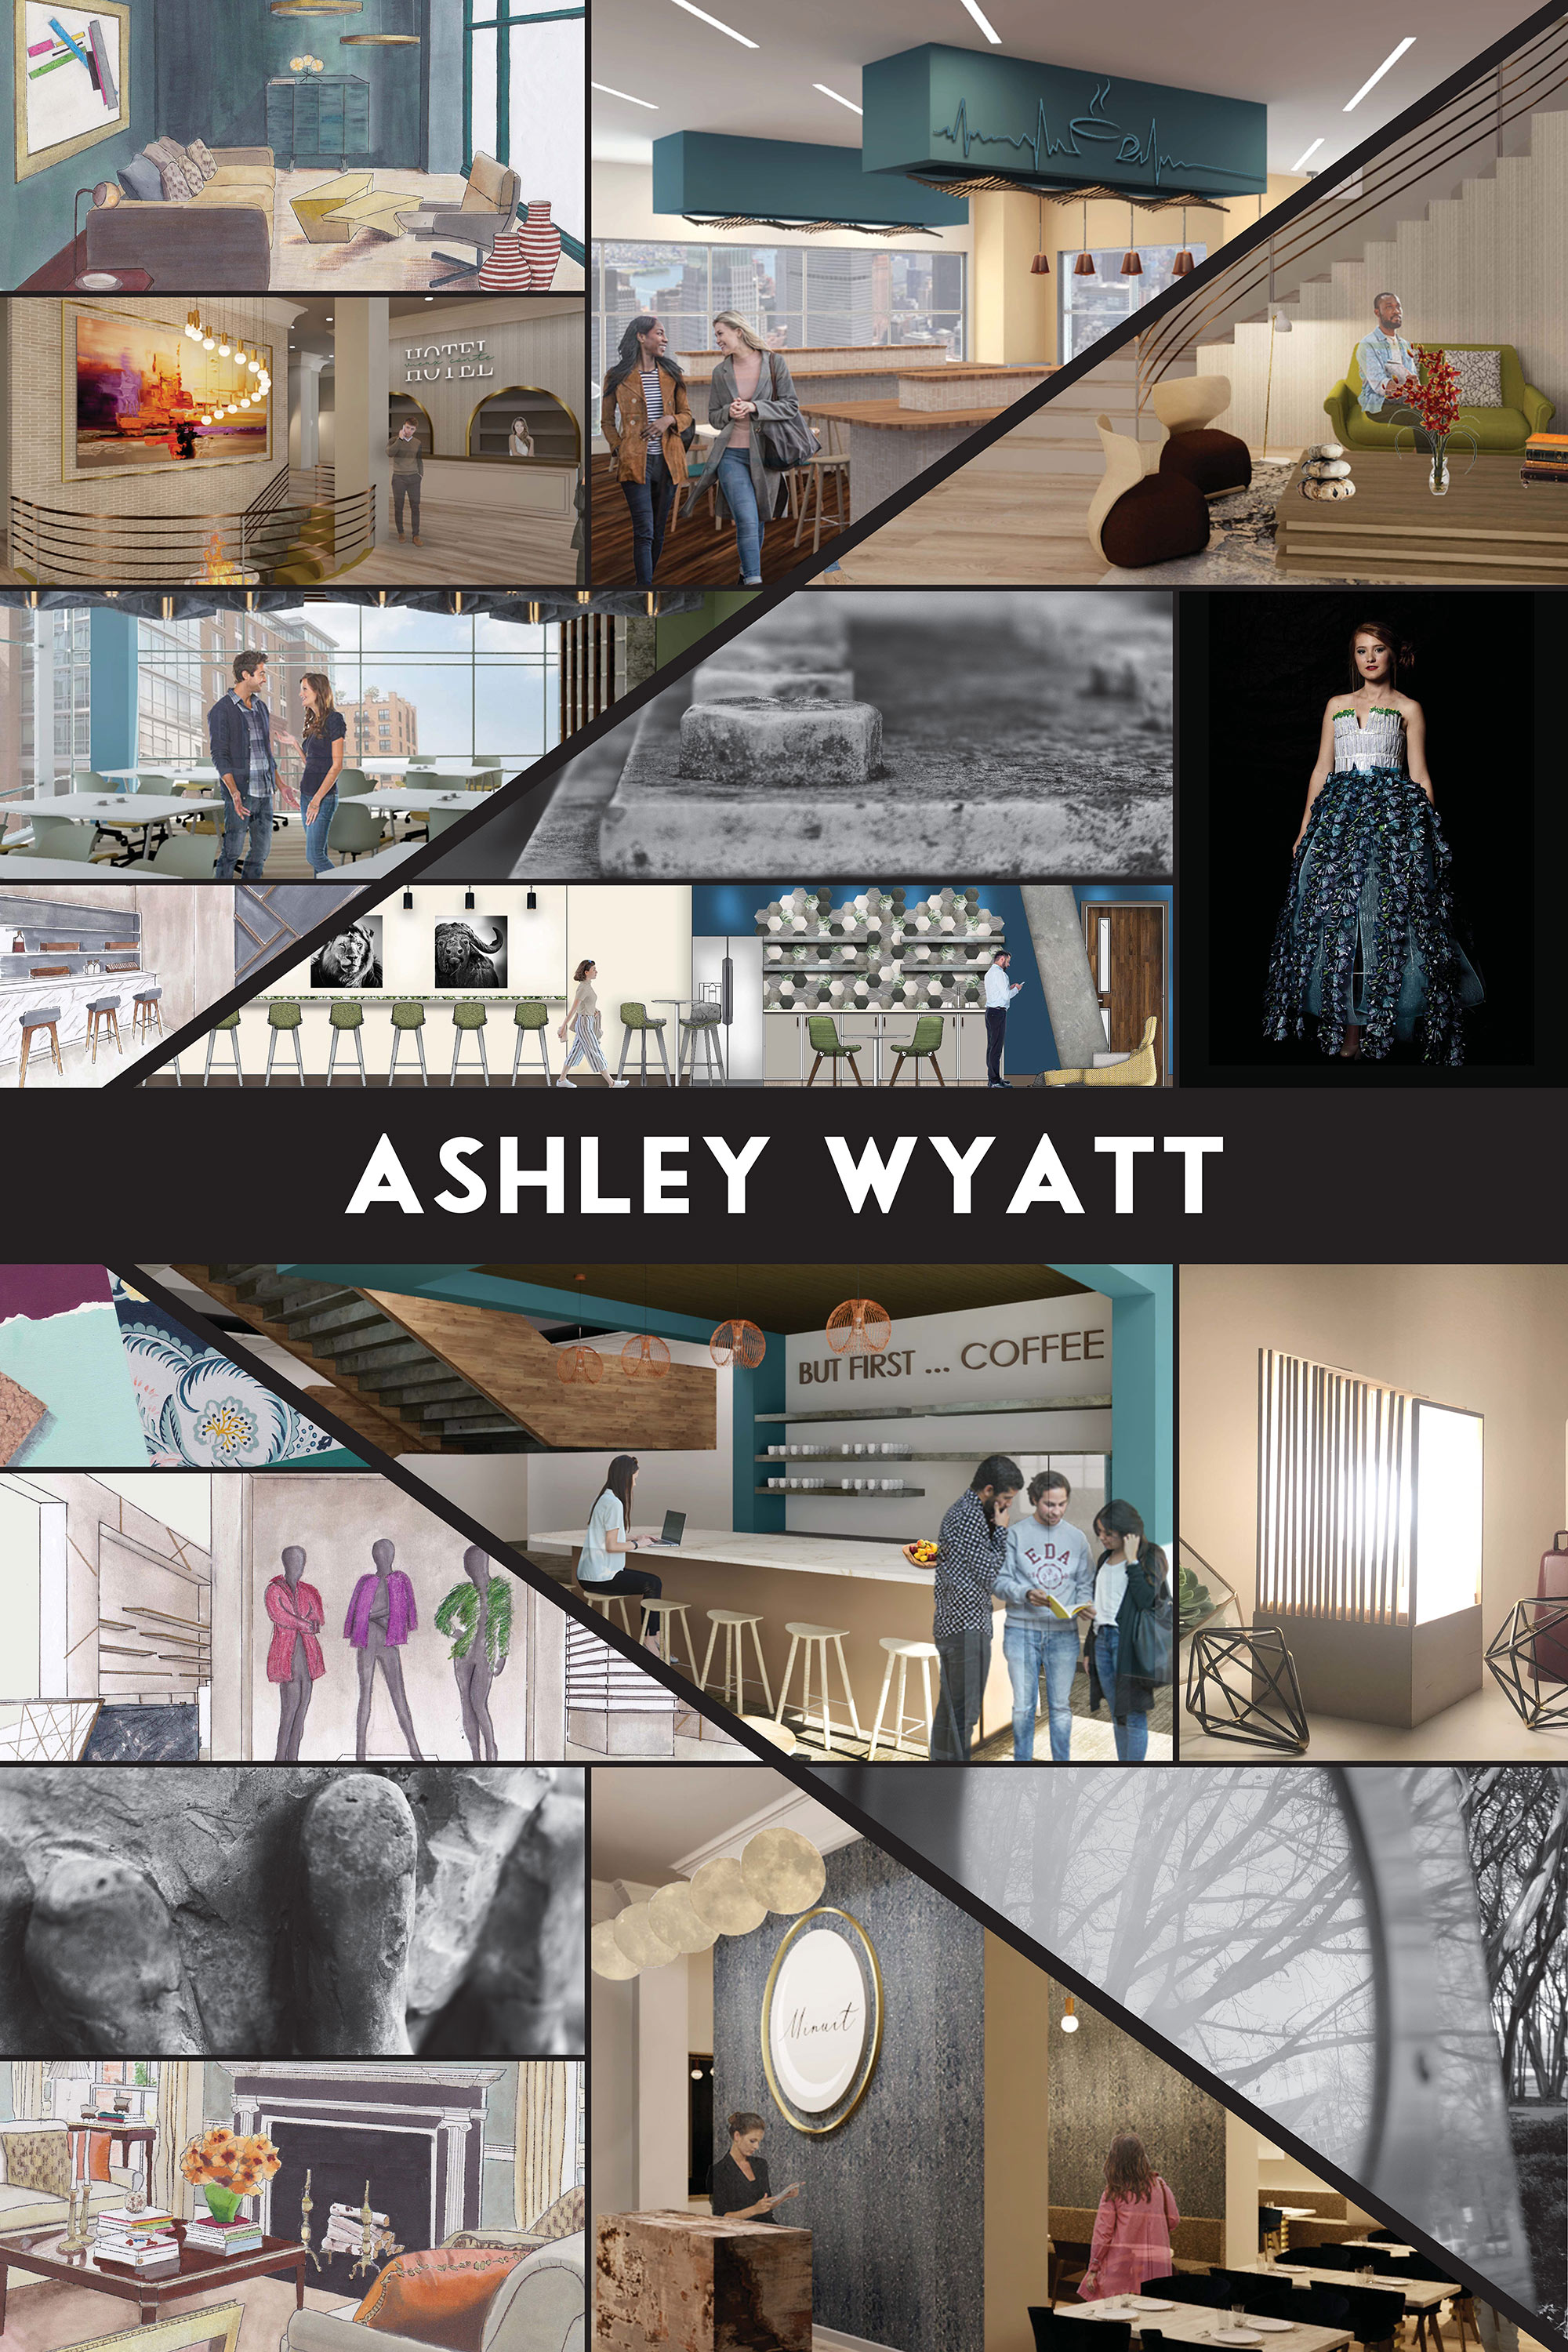 Ashley Wyatt's senior exhibit board